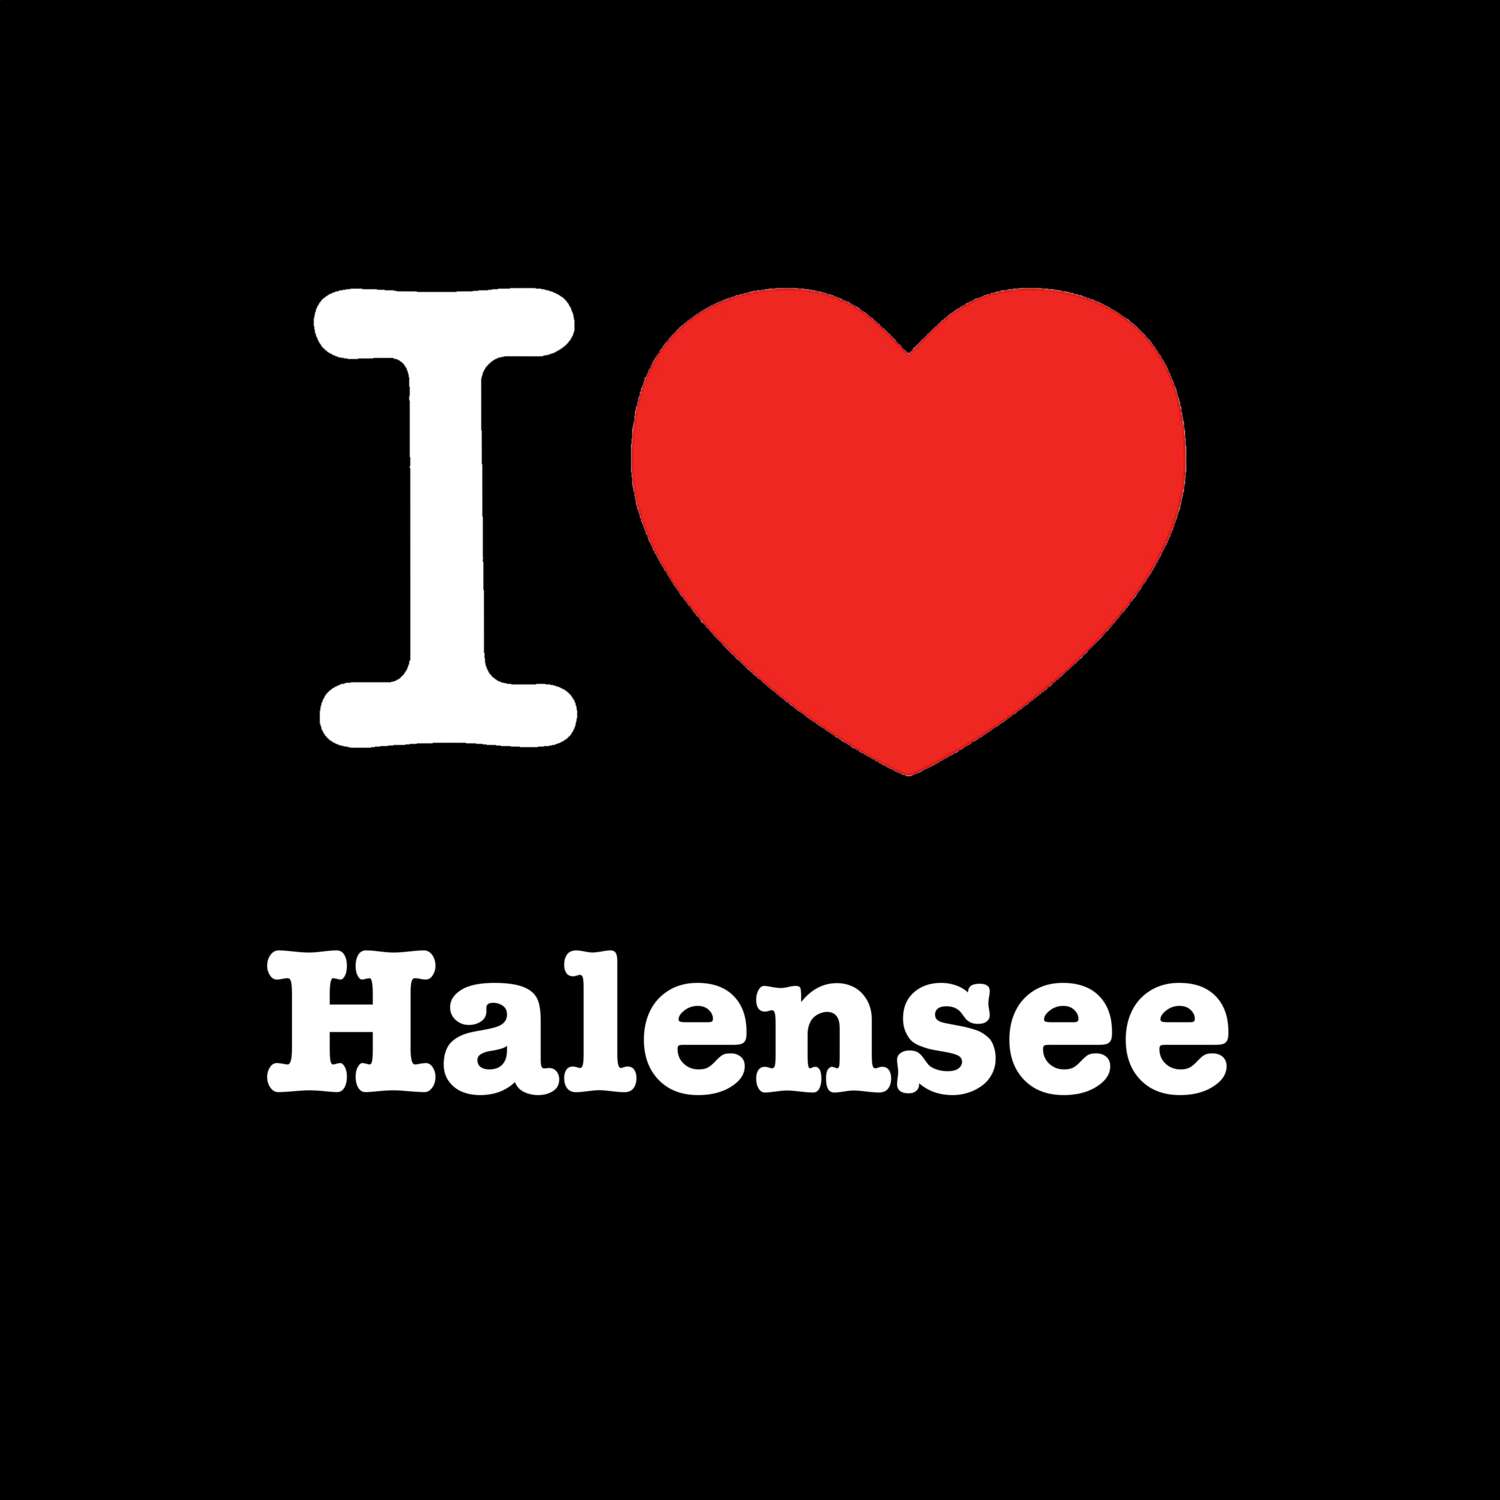 Halensee T-Shirt »I love«